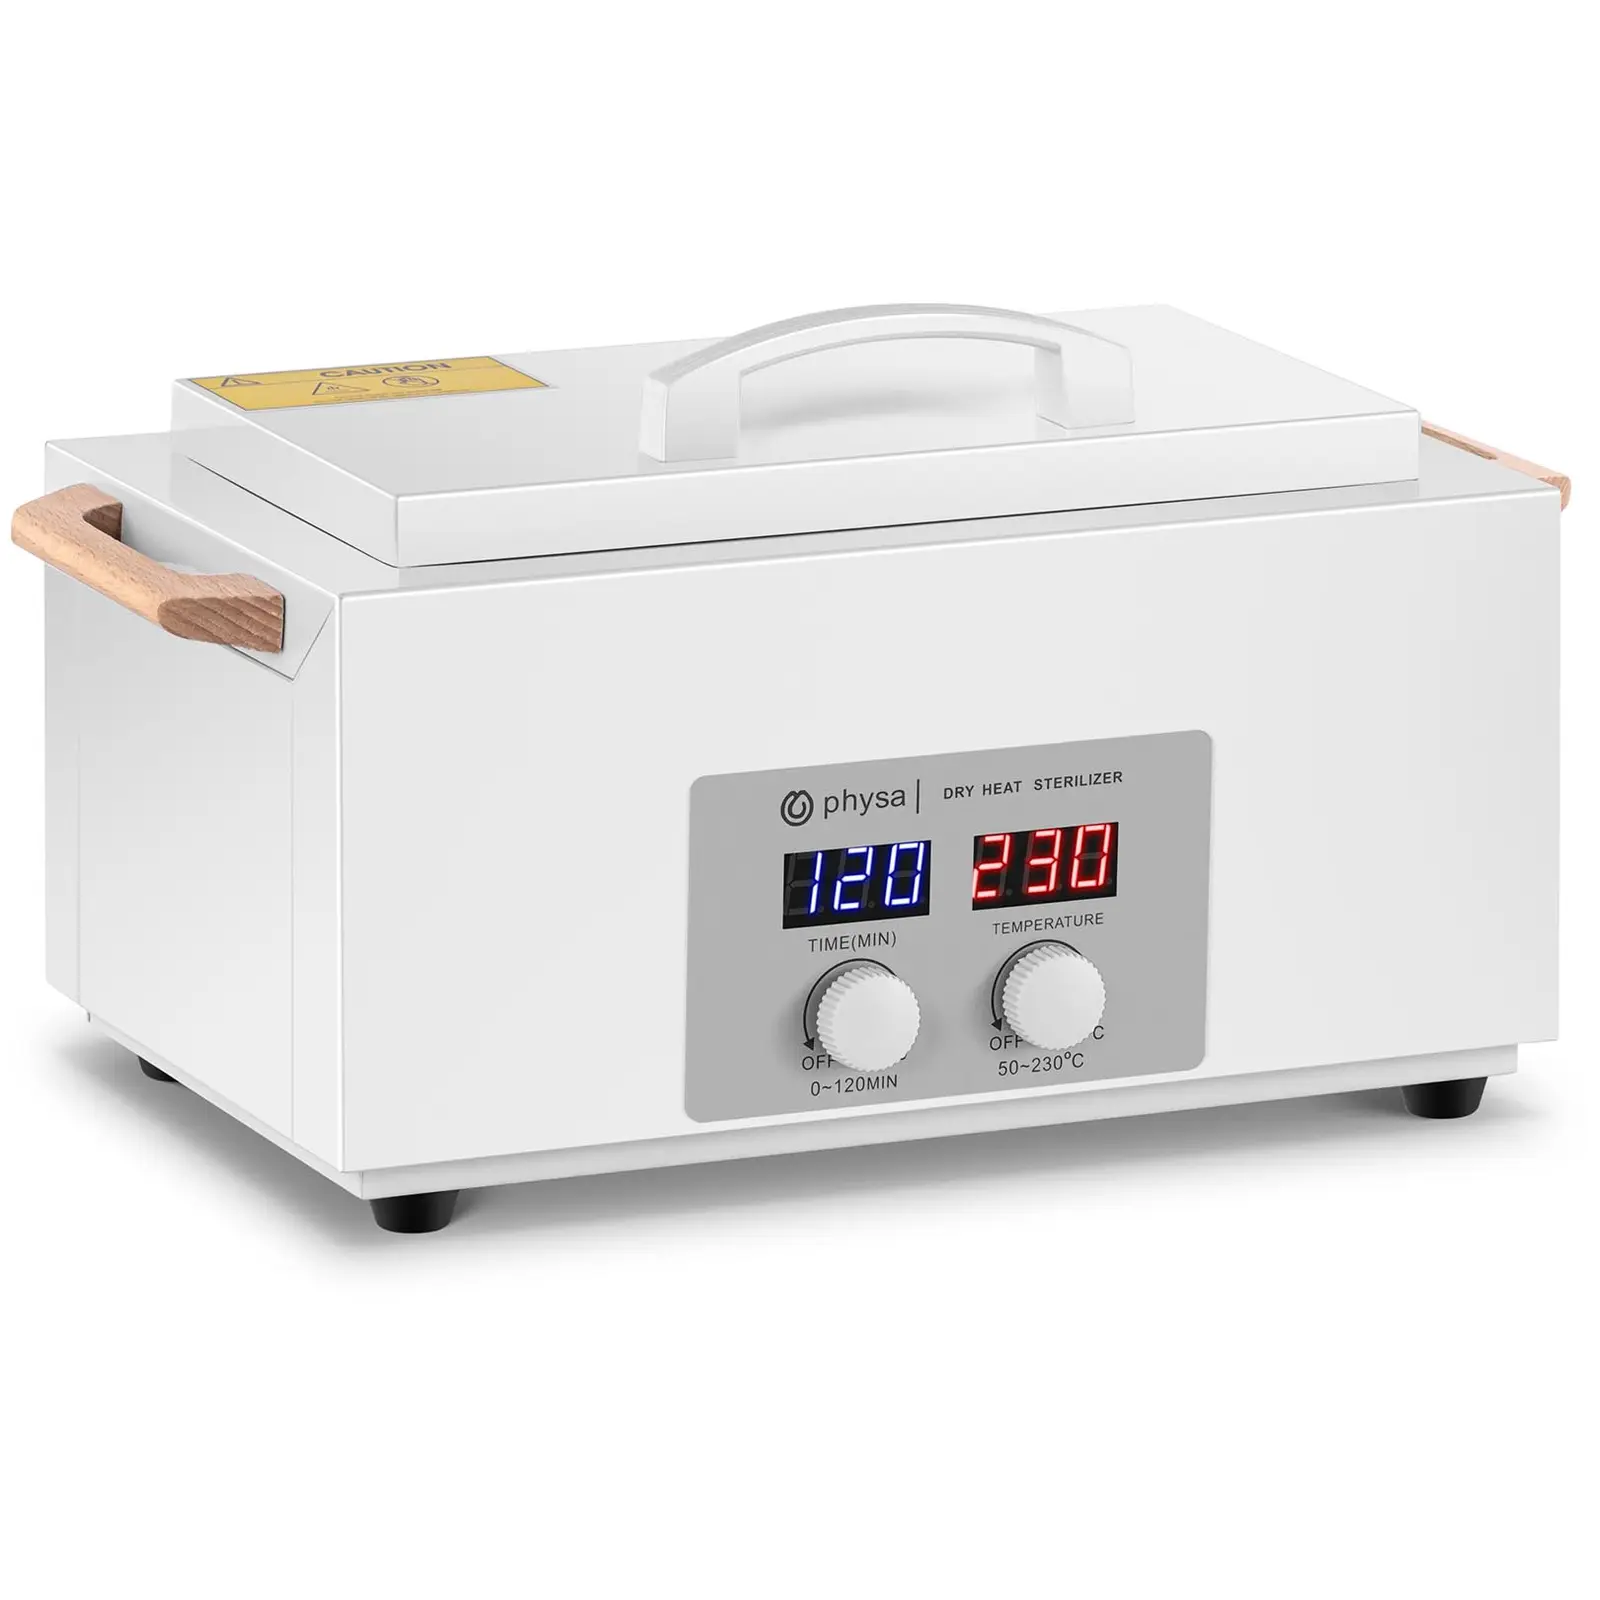 Horkovzdušný sterilizátor - 1,8 l - časovač - 50 až 230 °C